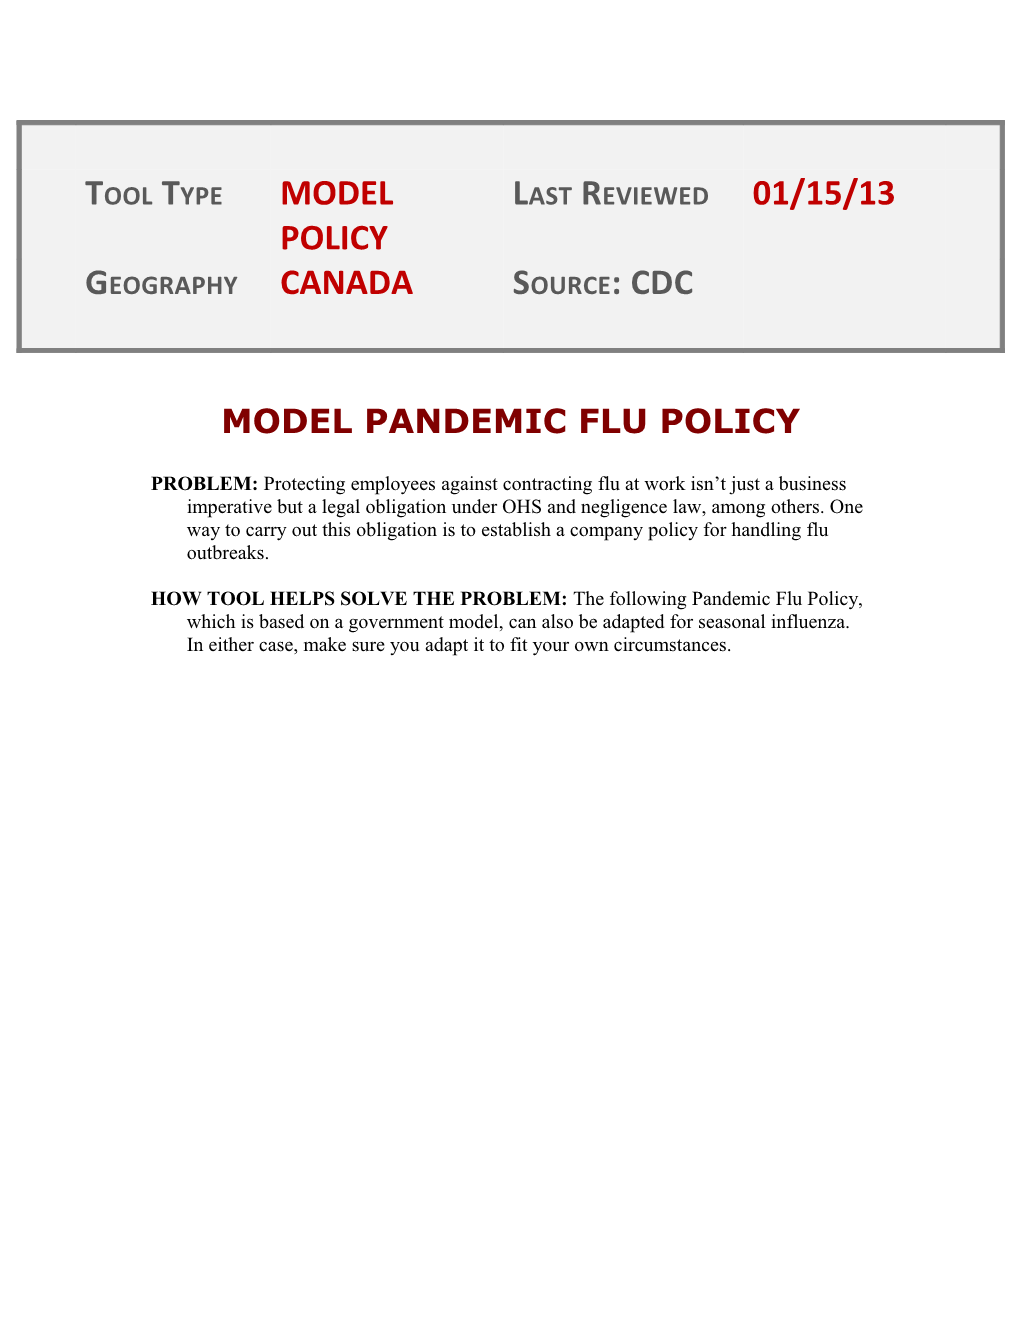 Model Pandemic Flu Policy